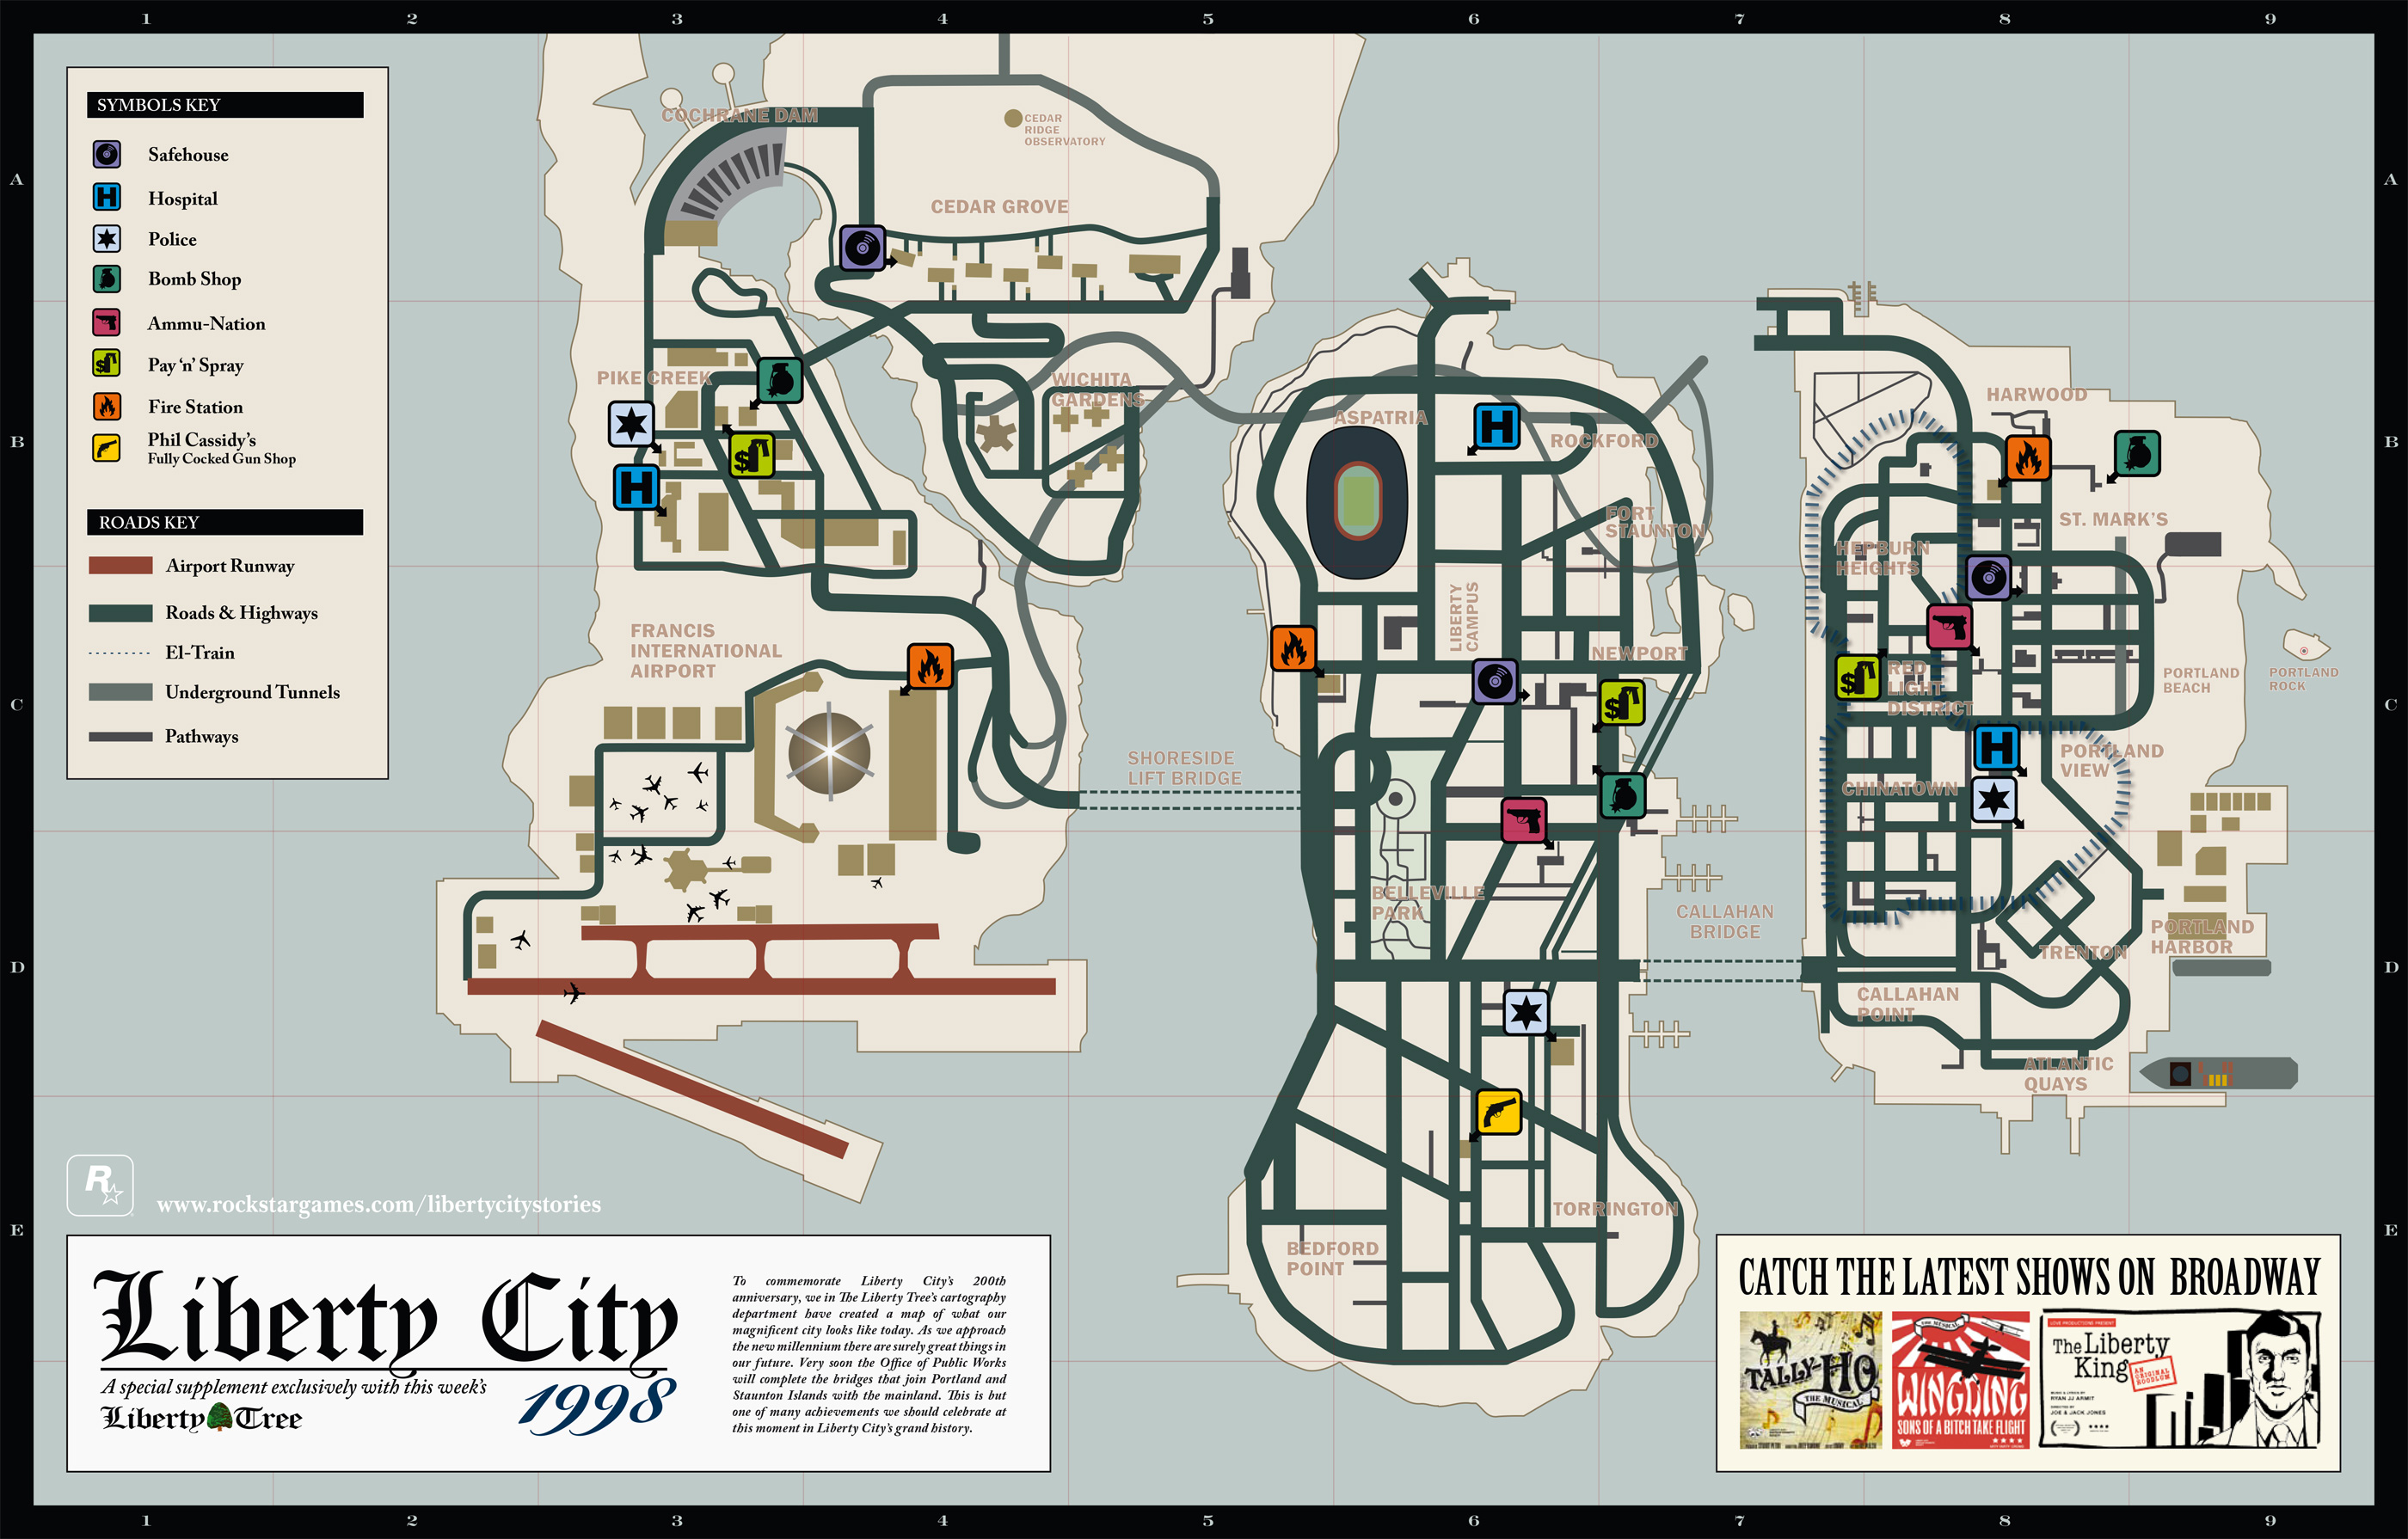 GTA Vice City PS2 - Episodio 68 - Taxi Wars 